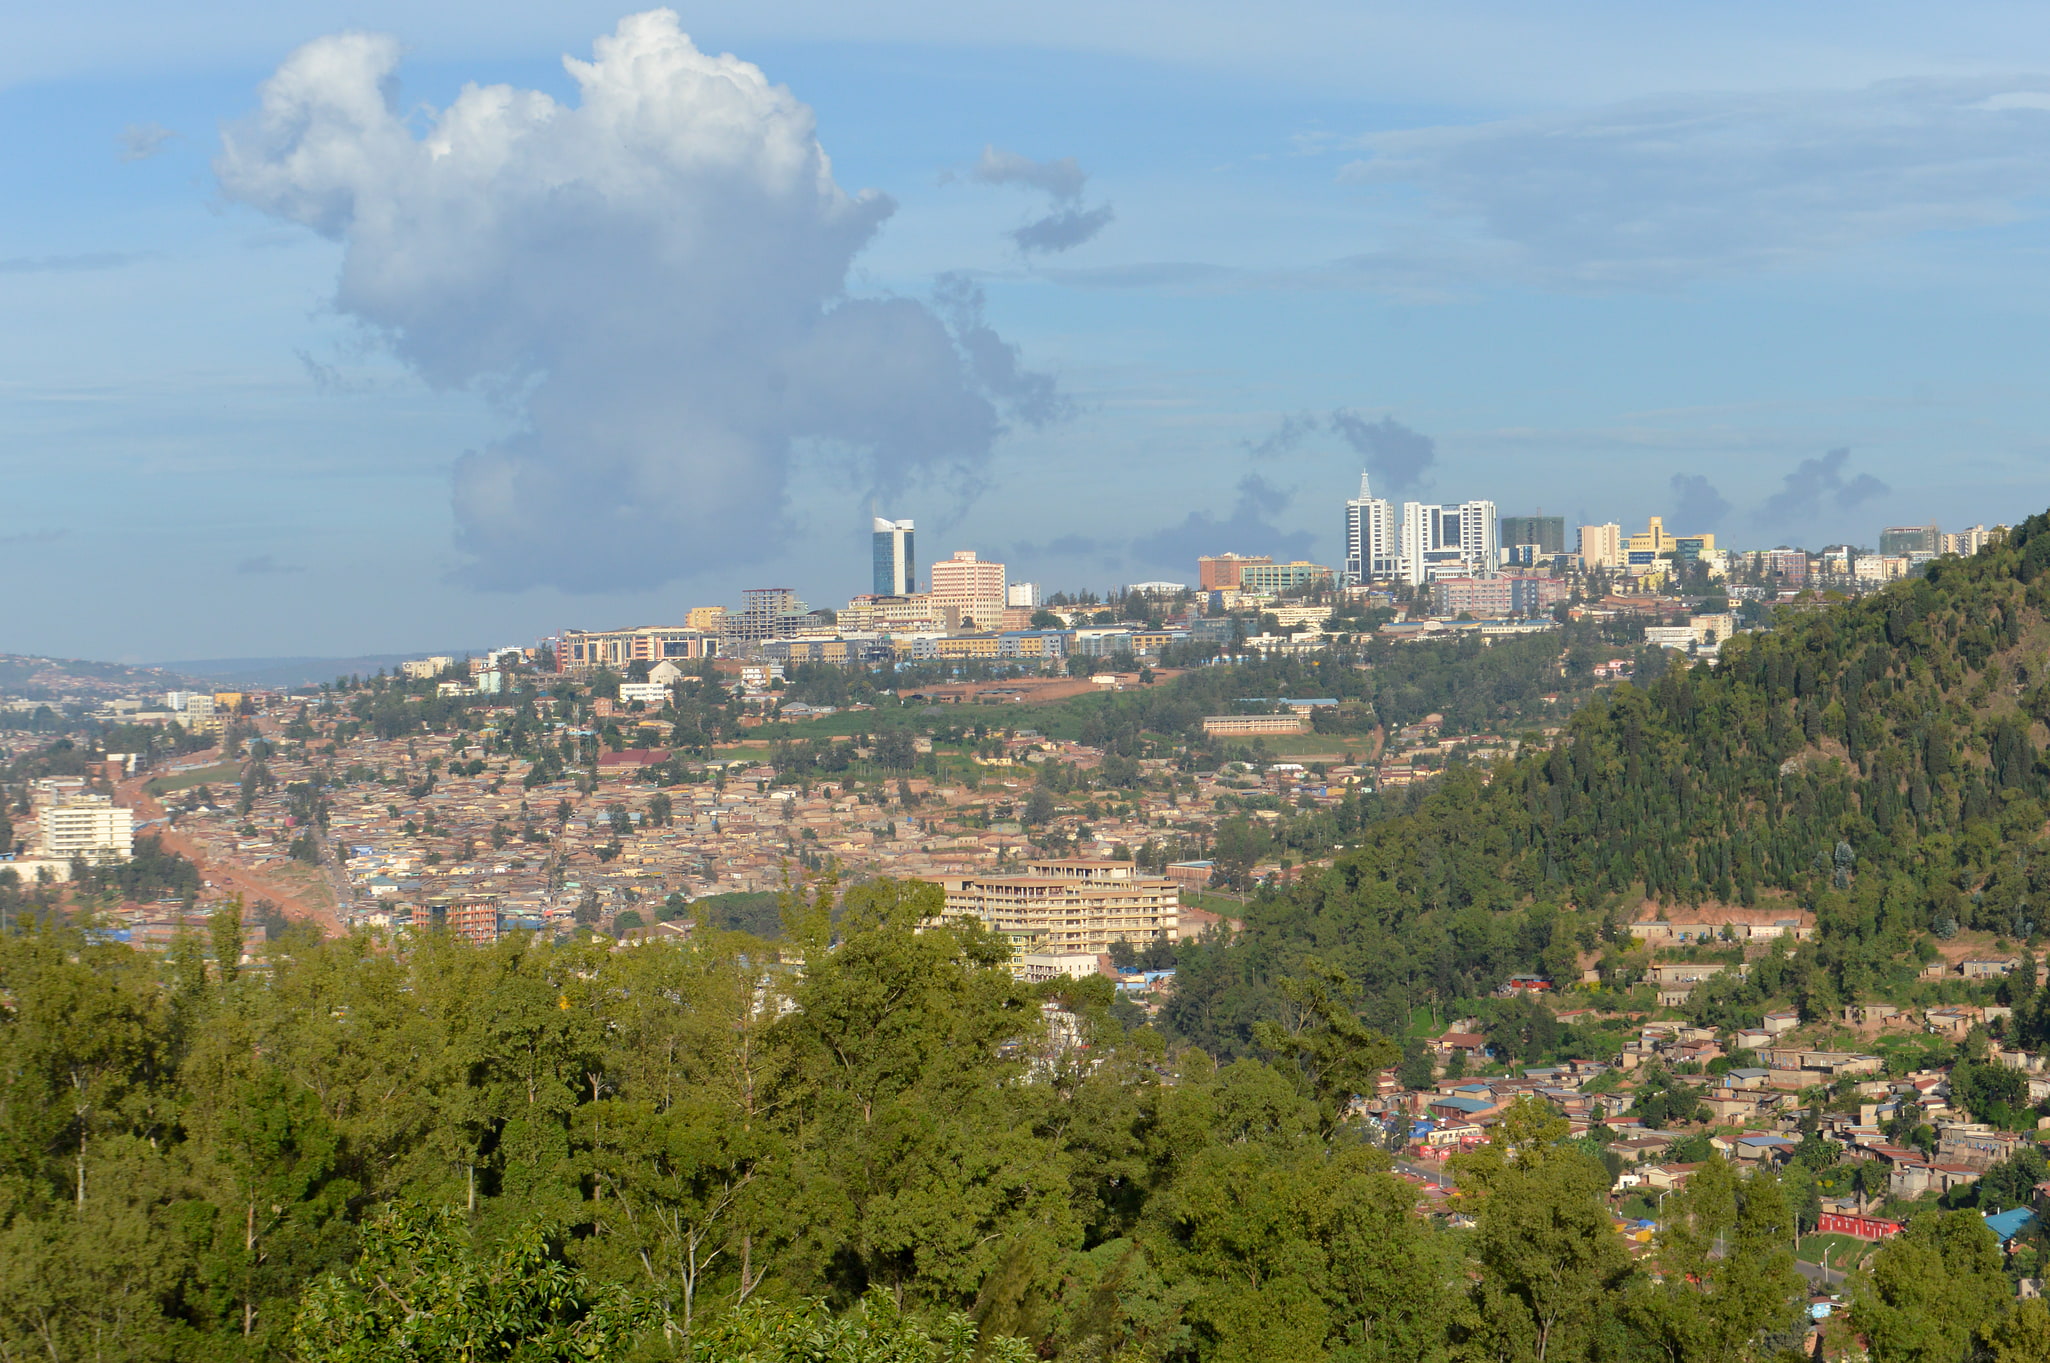 Kigali, Rwanda